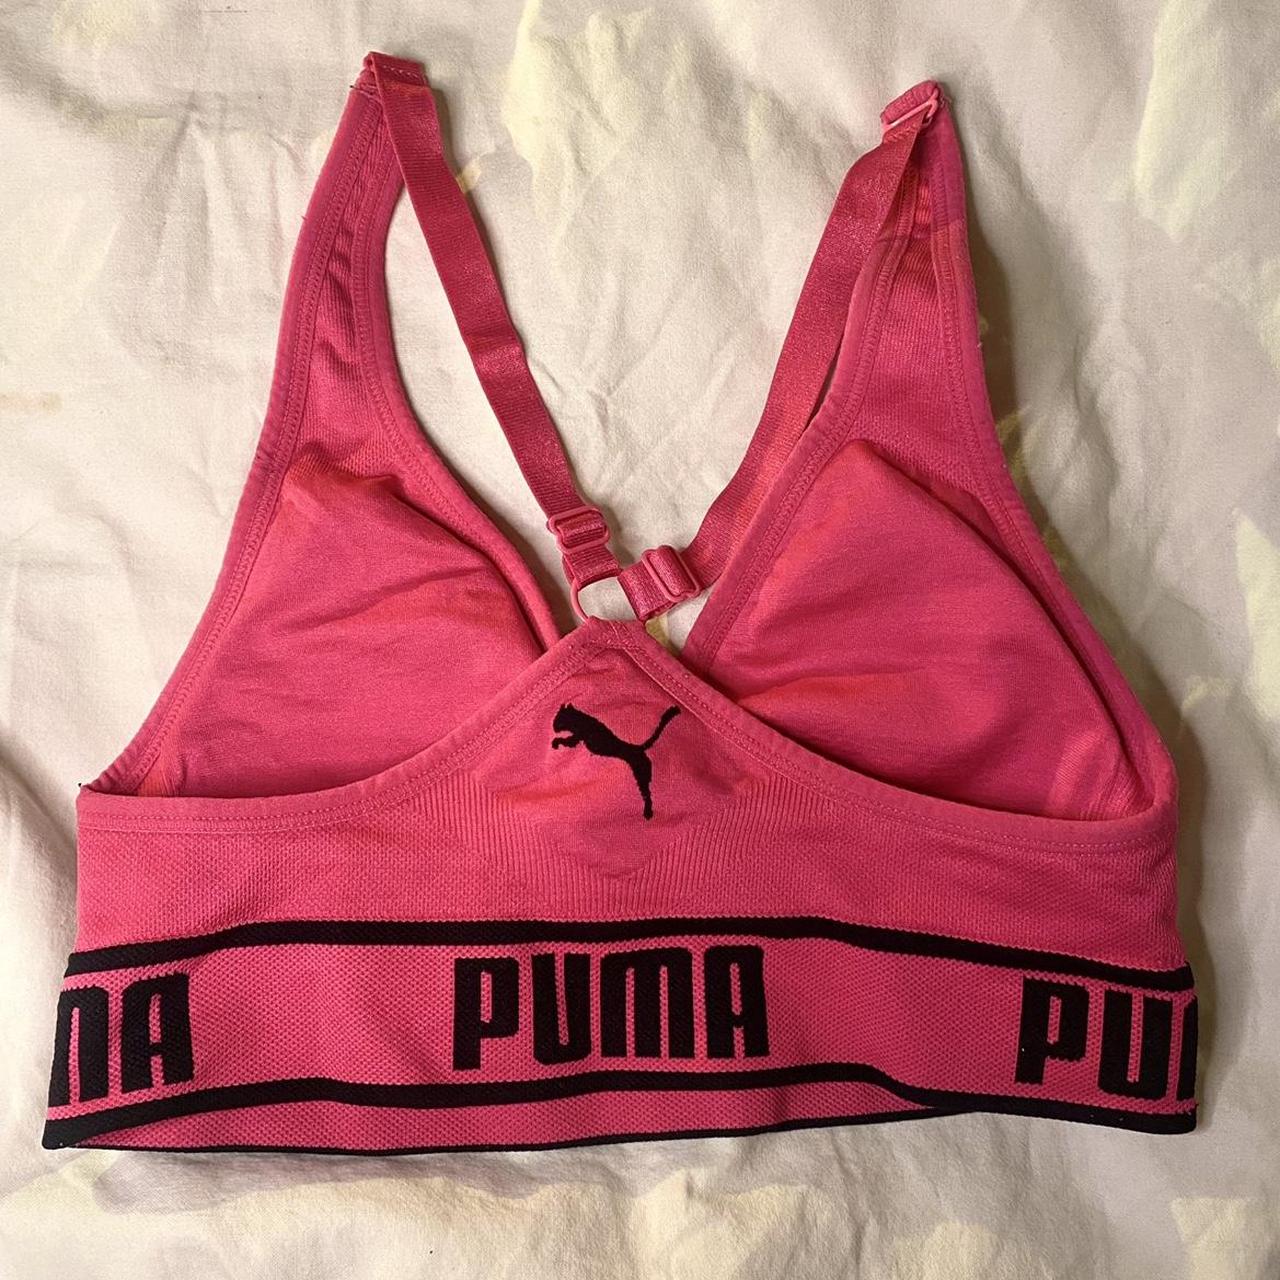 Urban outfitters Puma adjustable sports bra Hot... - Depop